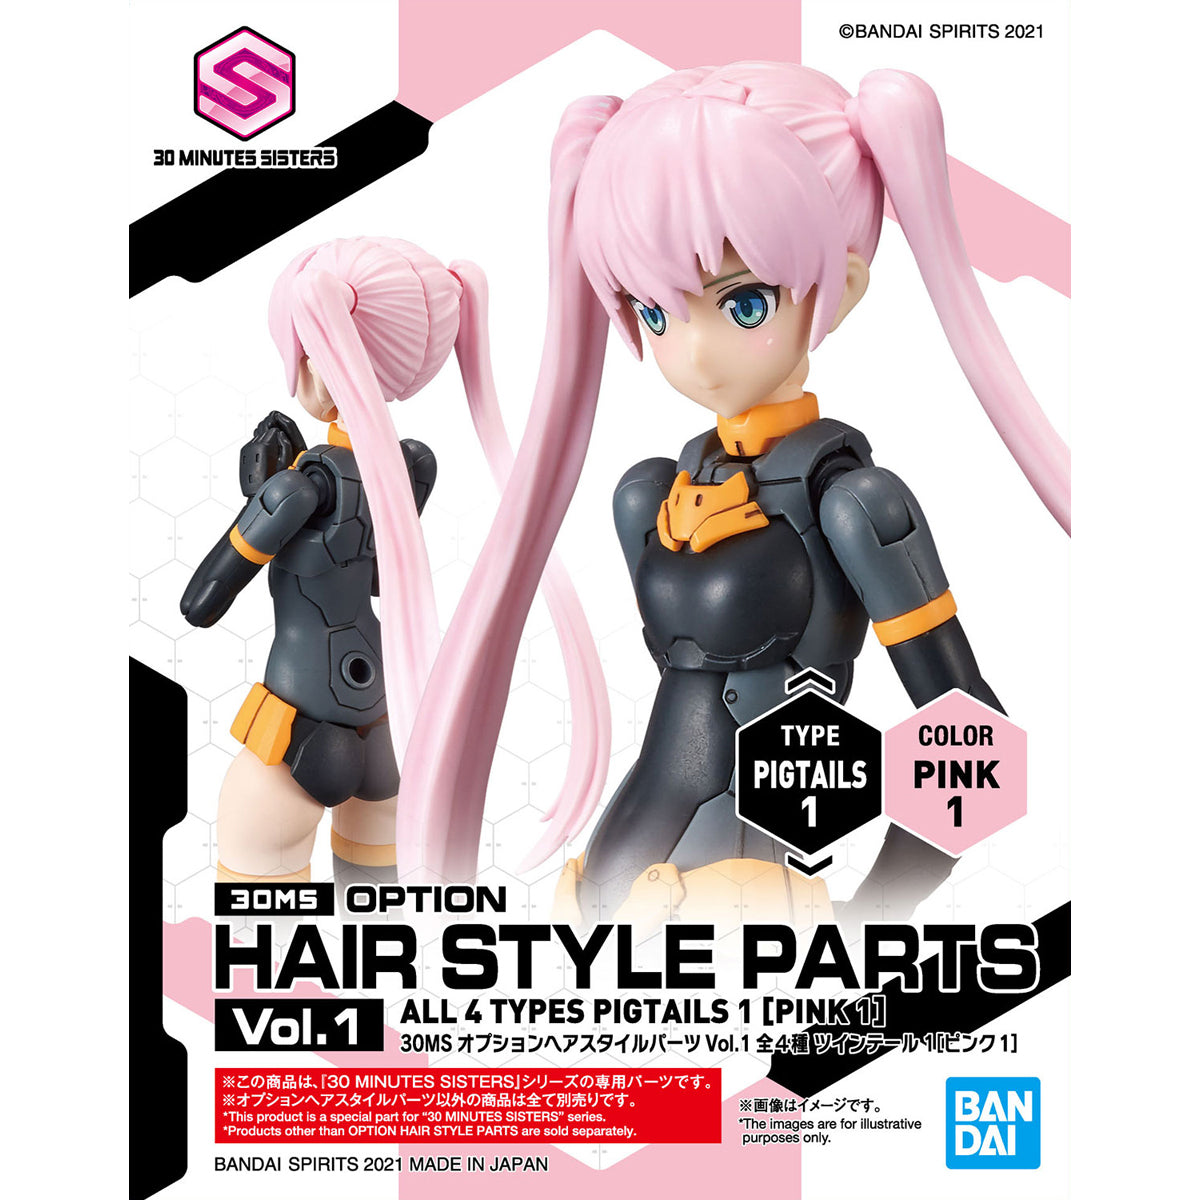 30MS Optional Hairstyle Parts Vol.1 (All 4 Types) - Glacier Hobbies - Bandai